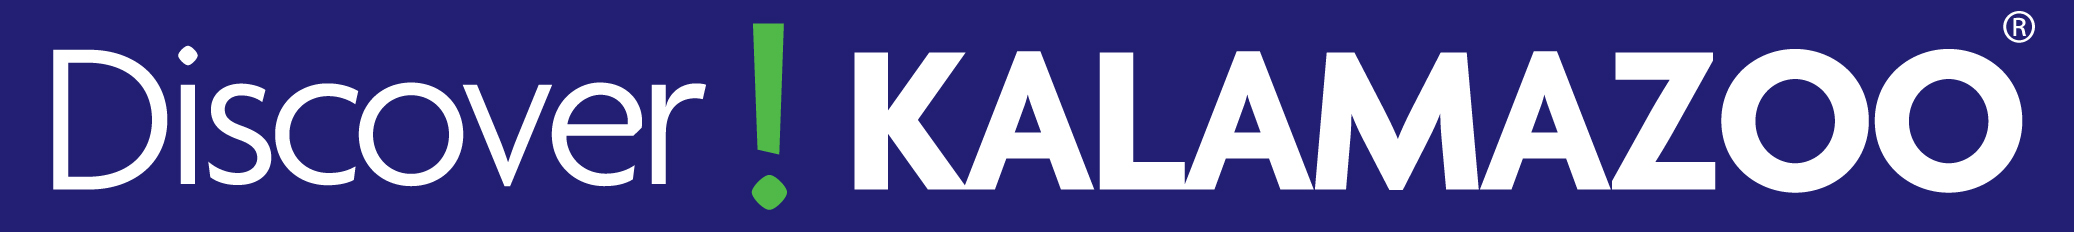 Discover! Kalamazoo Logo